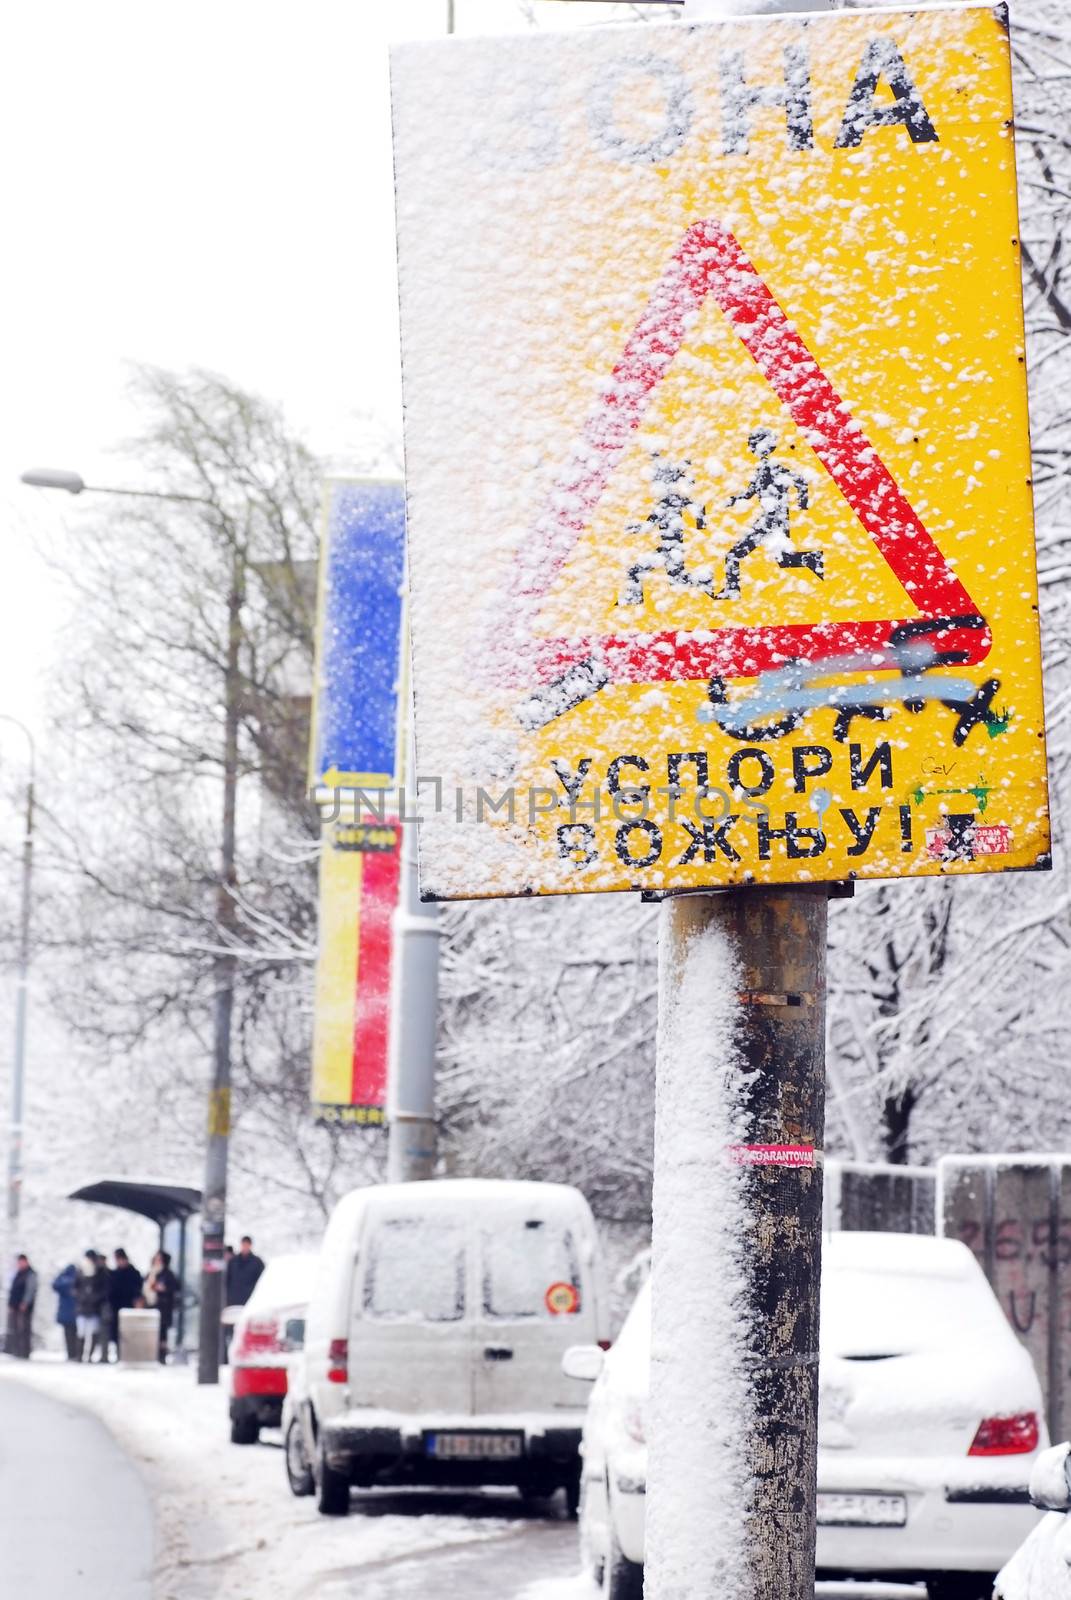 Snowy street sign in Belgrade by simply